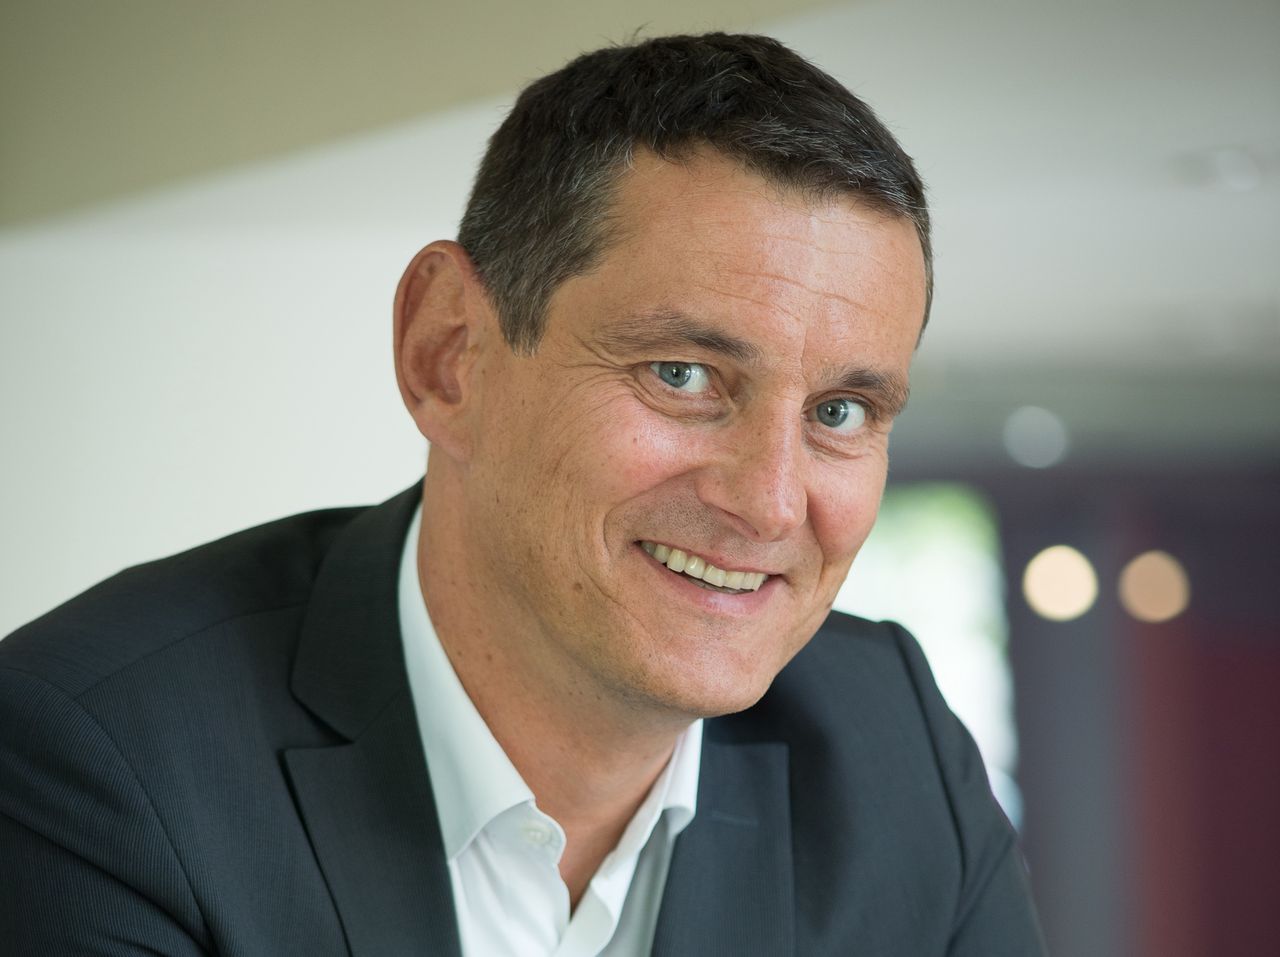 Jérôme Micheron - szef produktu w firmie Peugeot